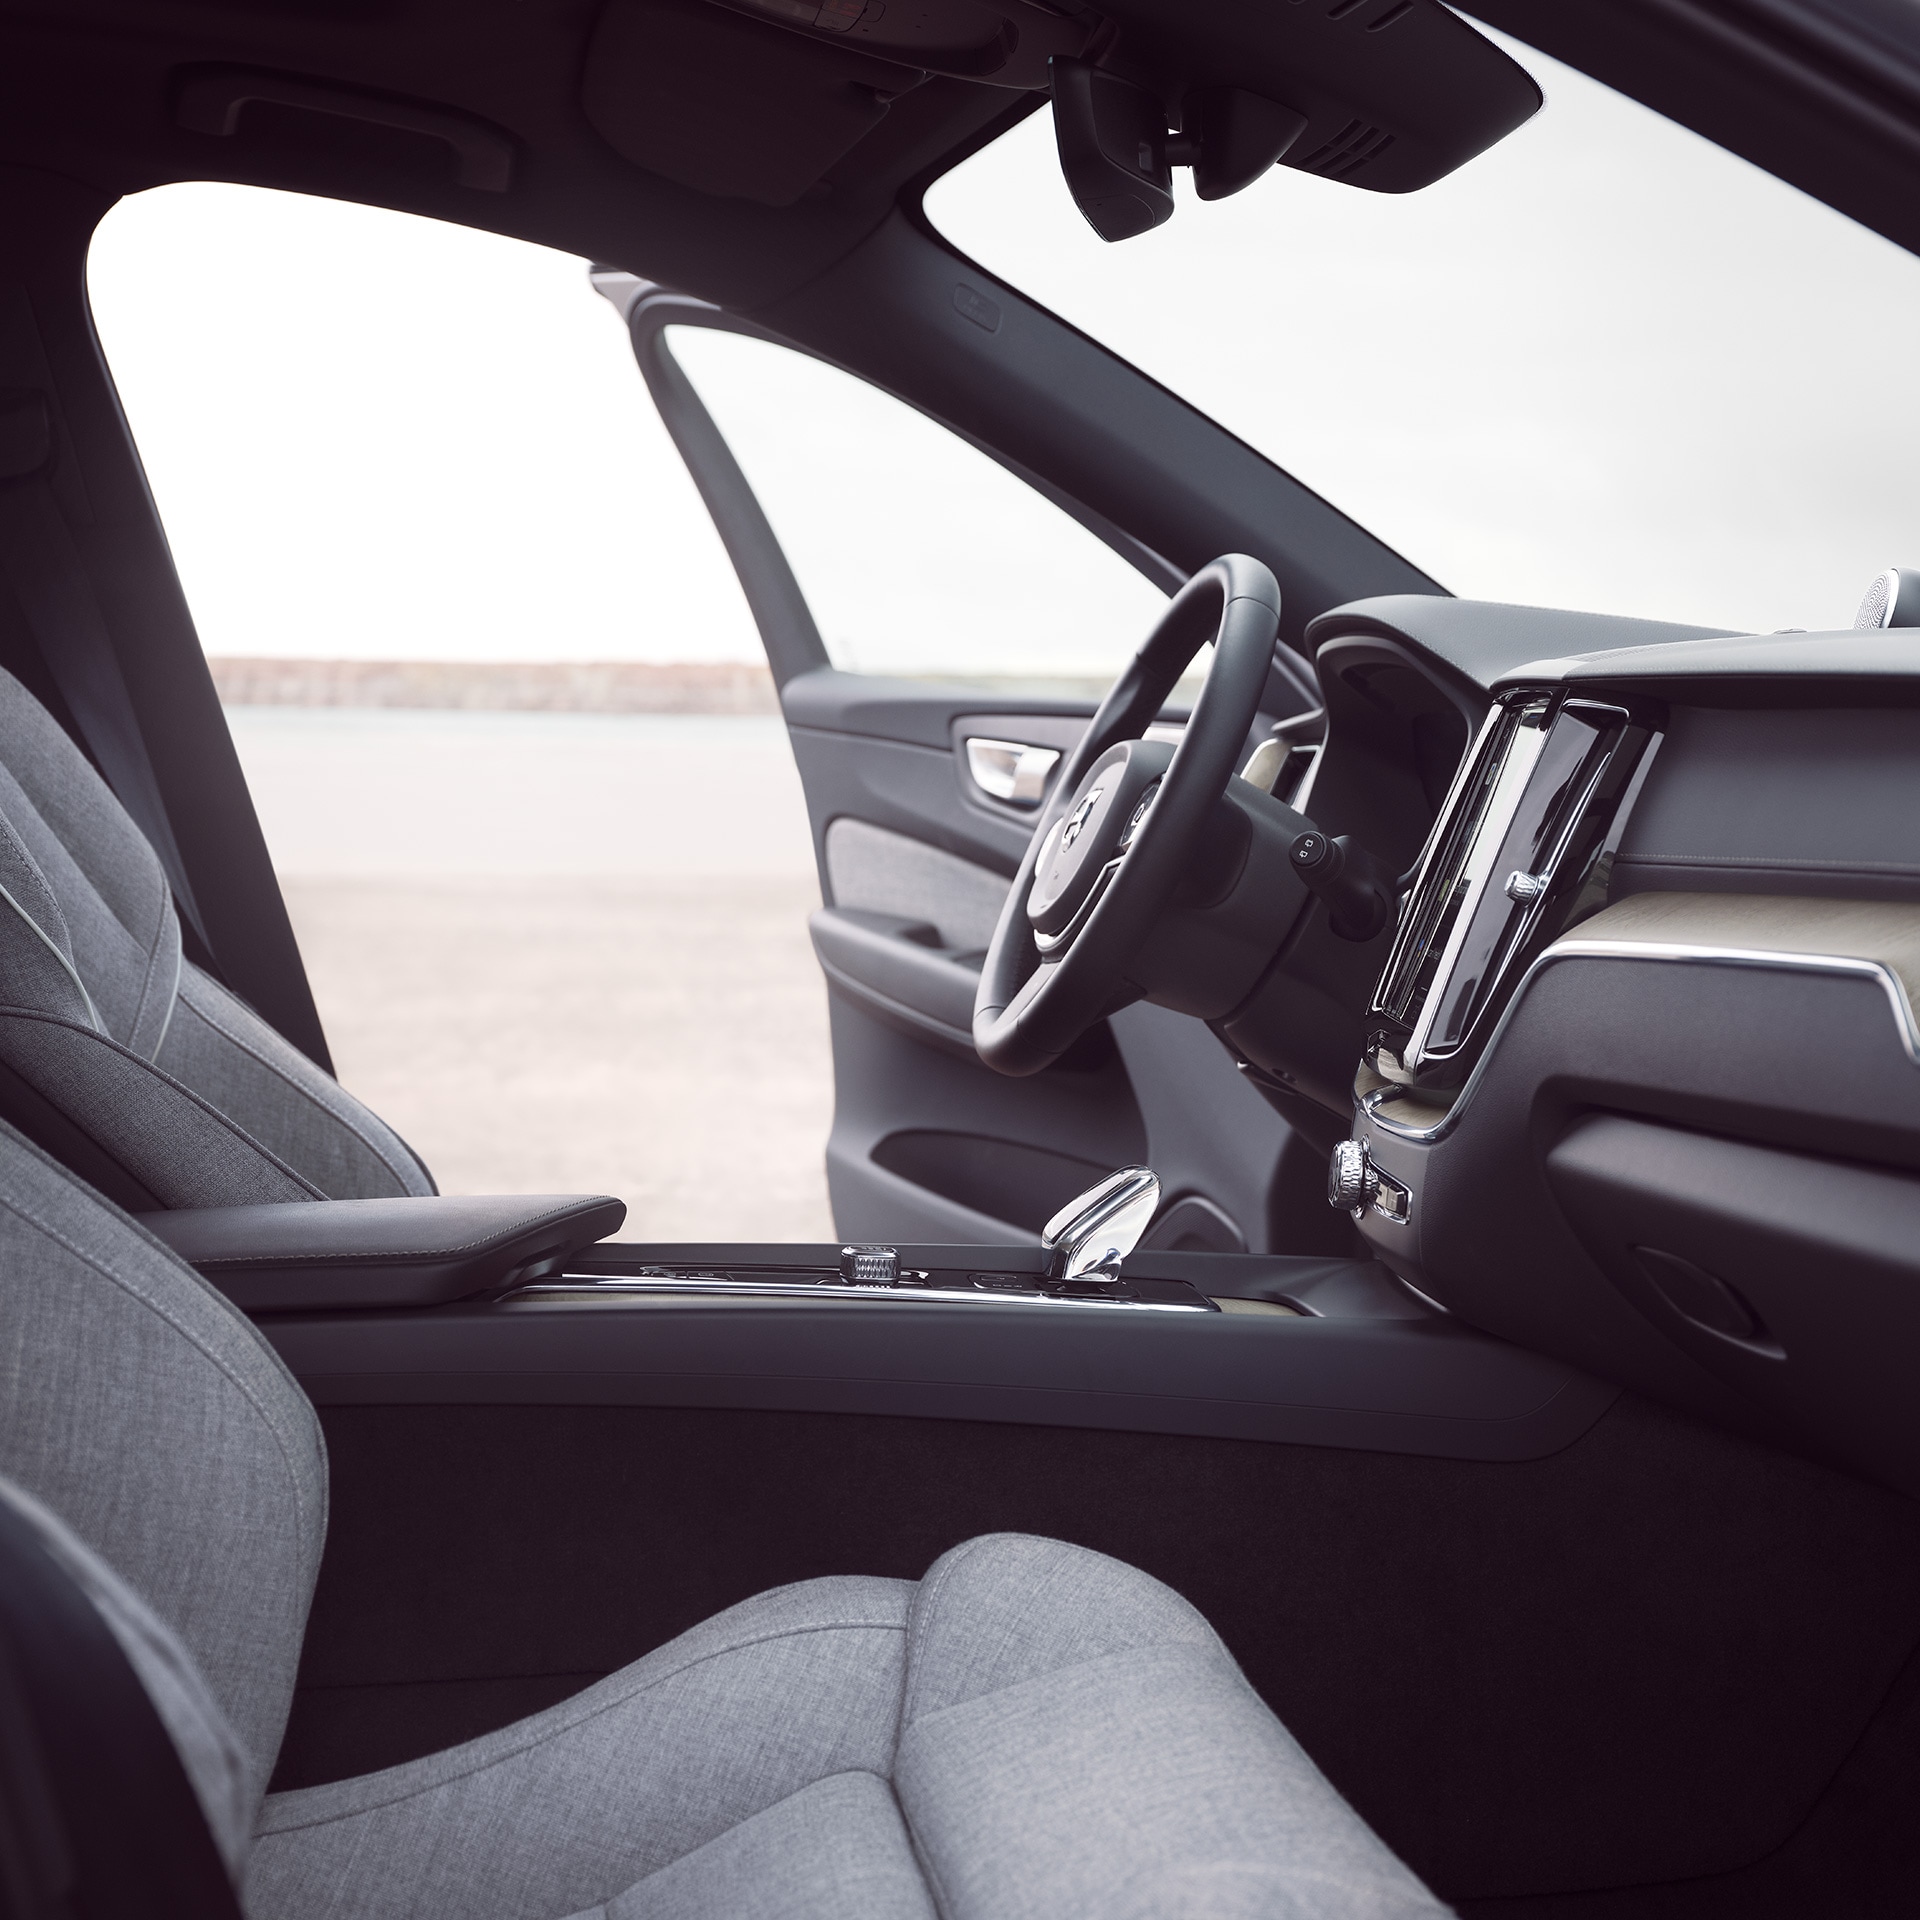 Unutrašnjost prednjeg dela automobila Volvo XC60 Recharge sa otvorenim vozačevim vratima.